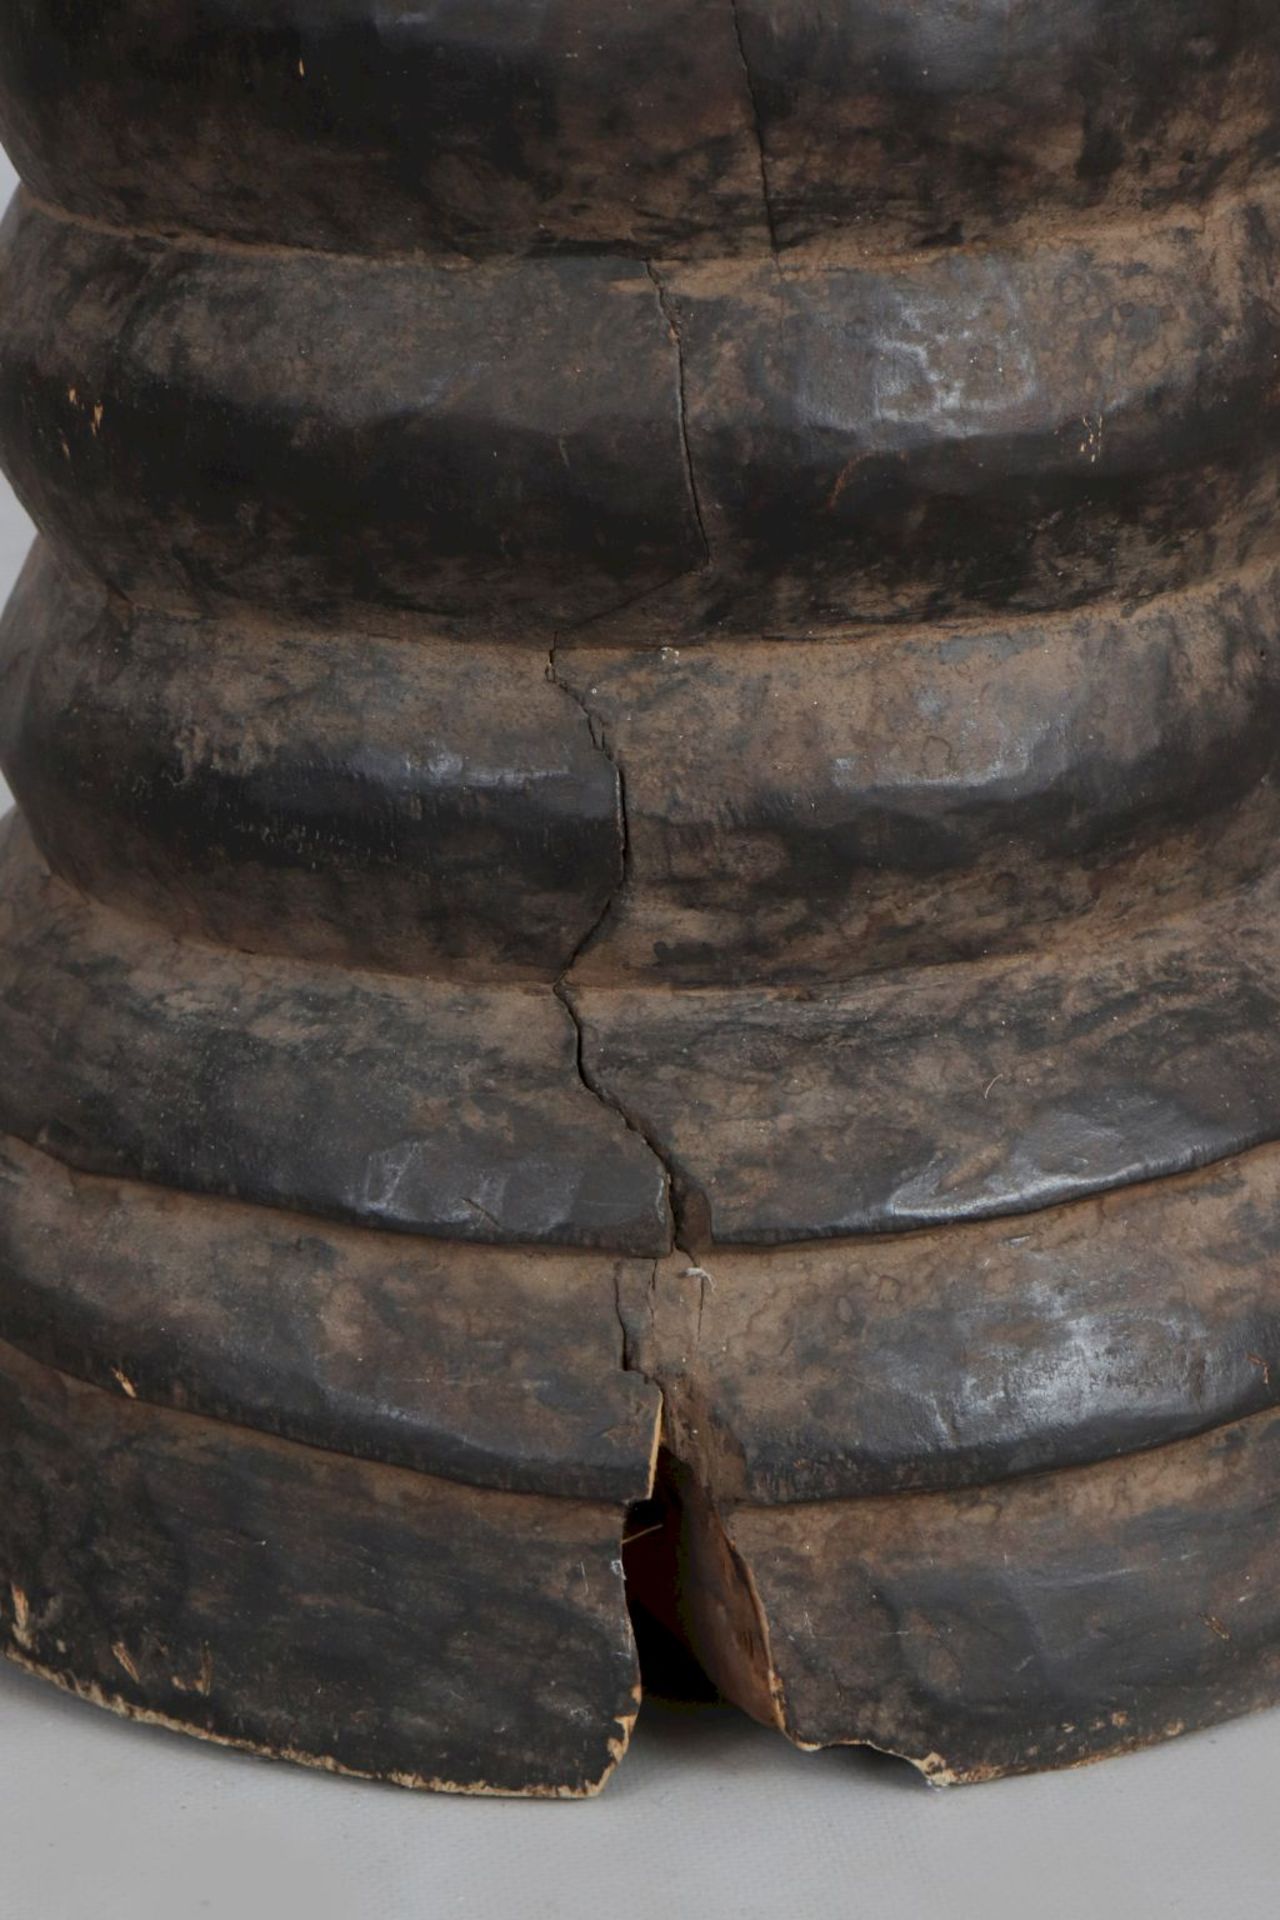 Afrikanische Trommel, wohl SongyeKongo, vermutlich 1. Hälfte 20. Jahrhundert, kalebassenförmi - Image 4 of 4